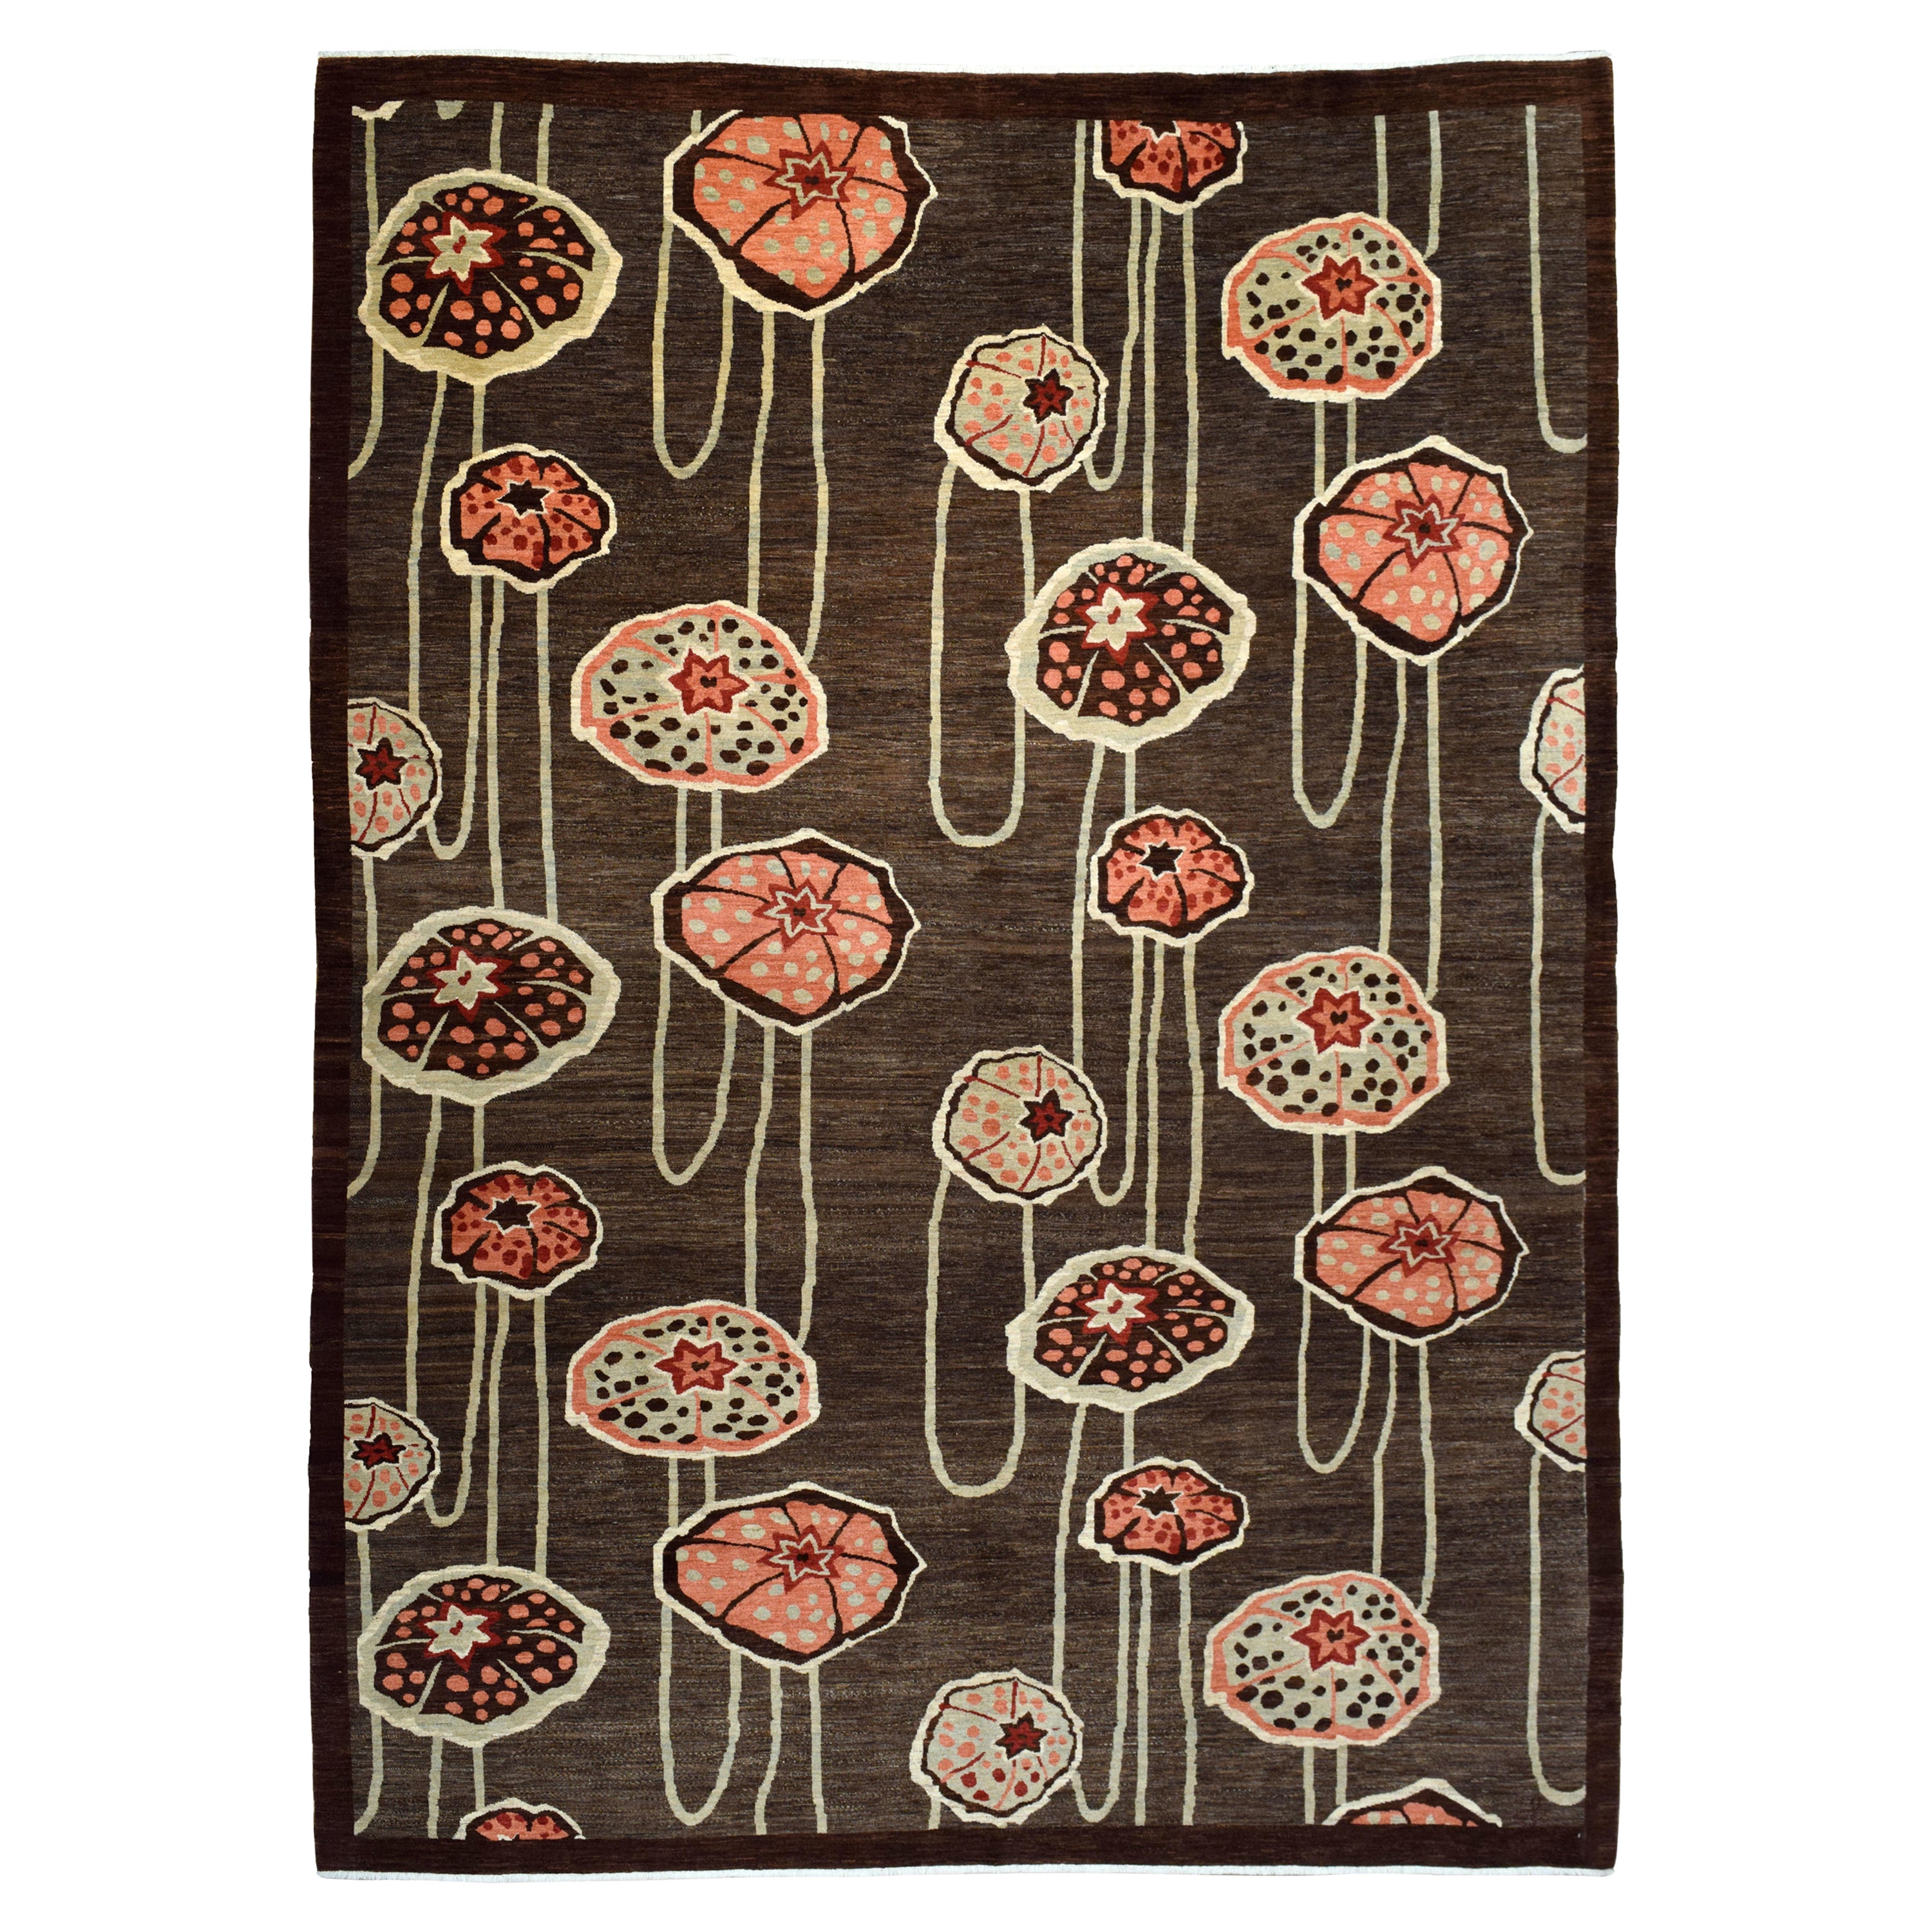 Orley Shabahang "Jellyfish" Art Deco Wool Persian Rug, 10’ x 14’